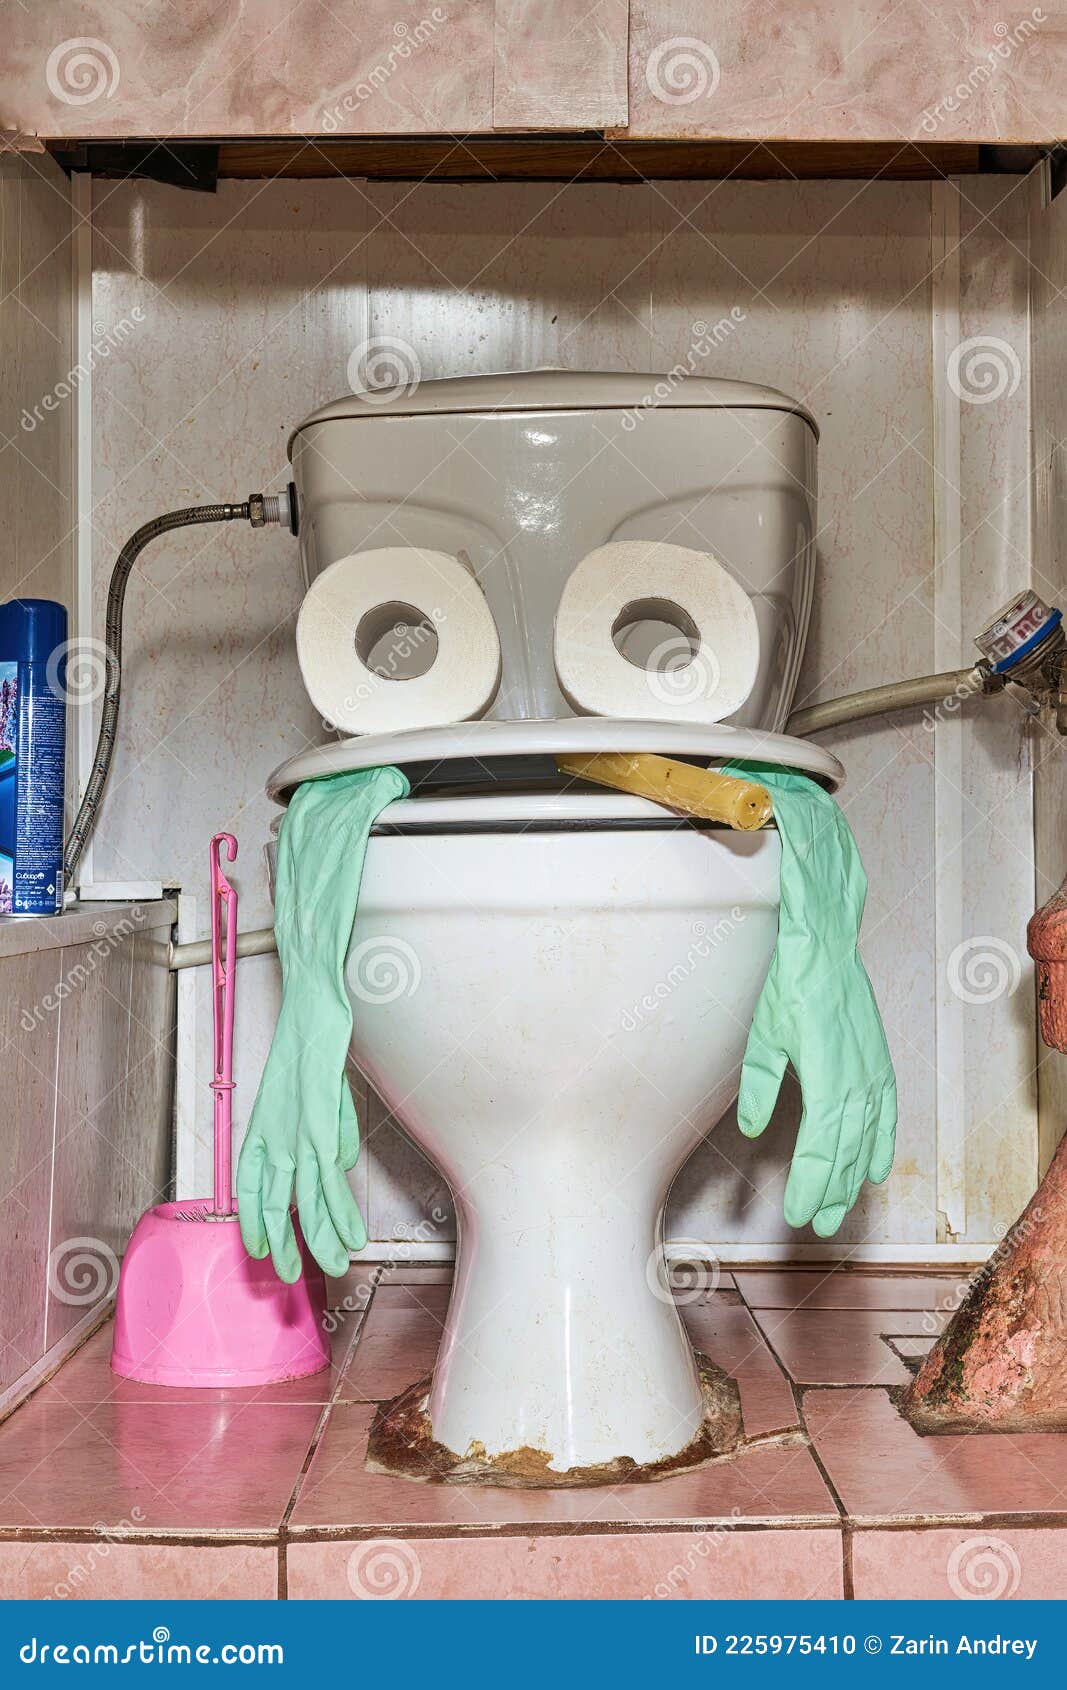 donna routen share human toilet paper photos